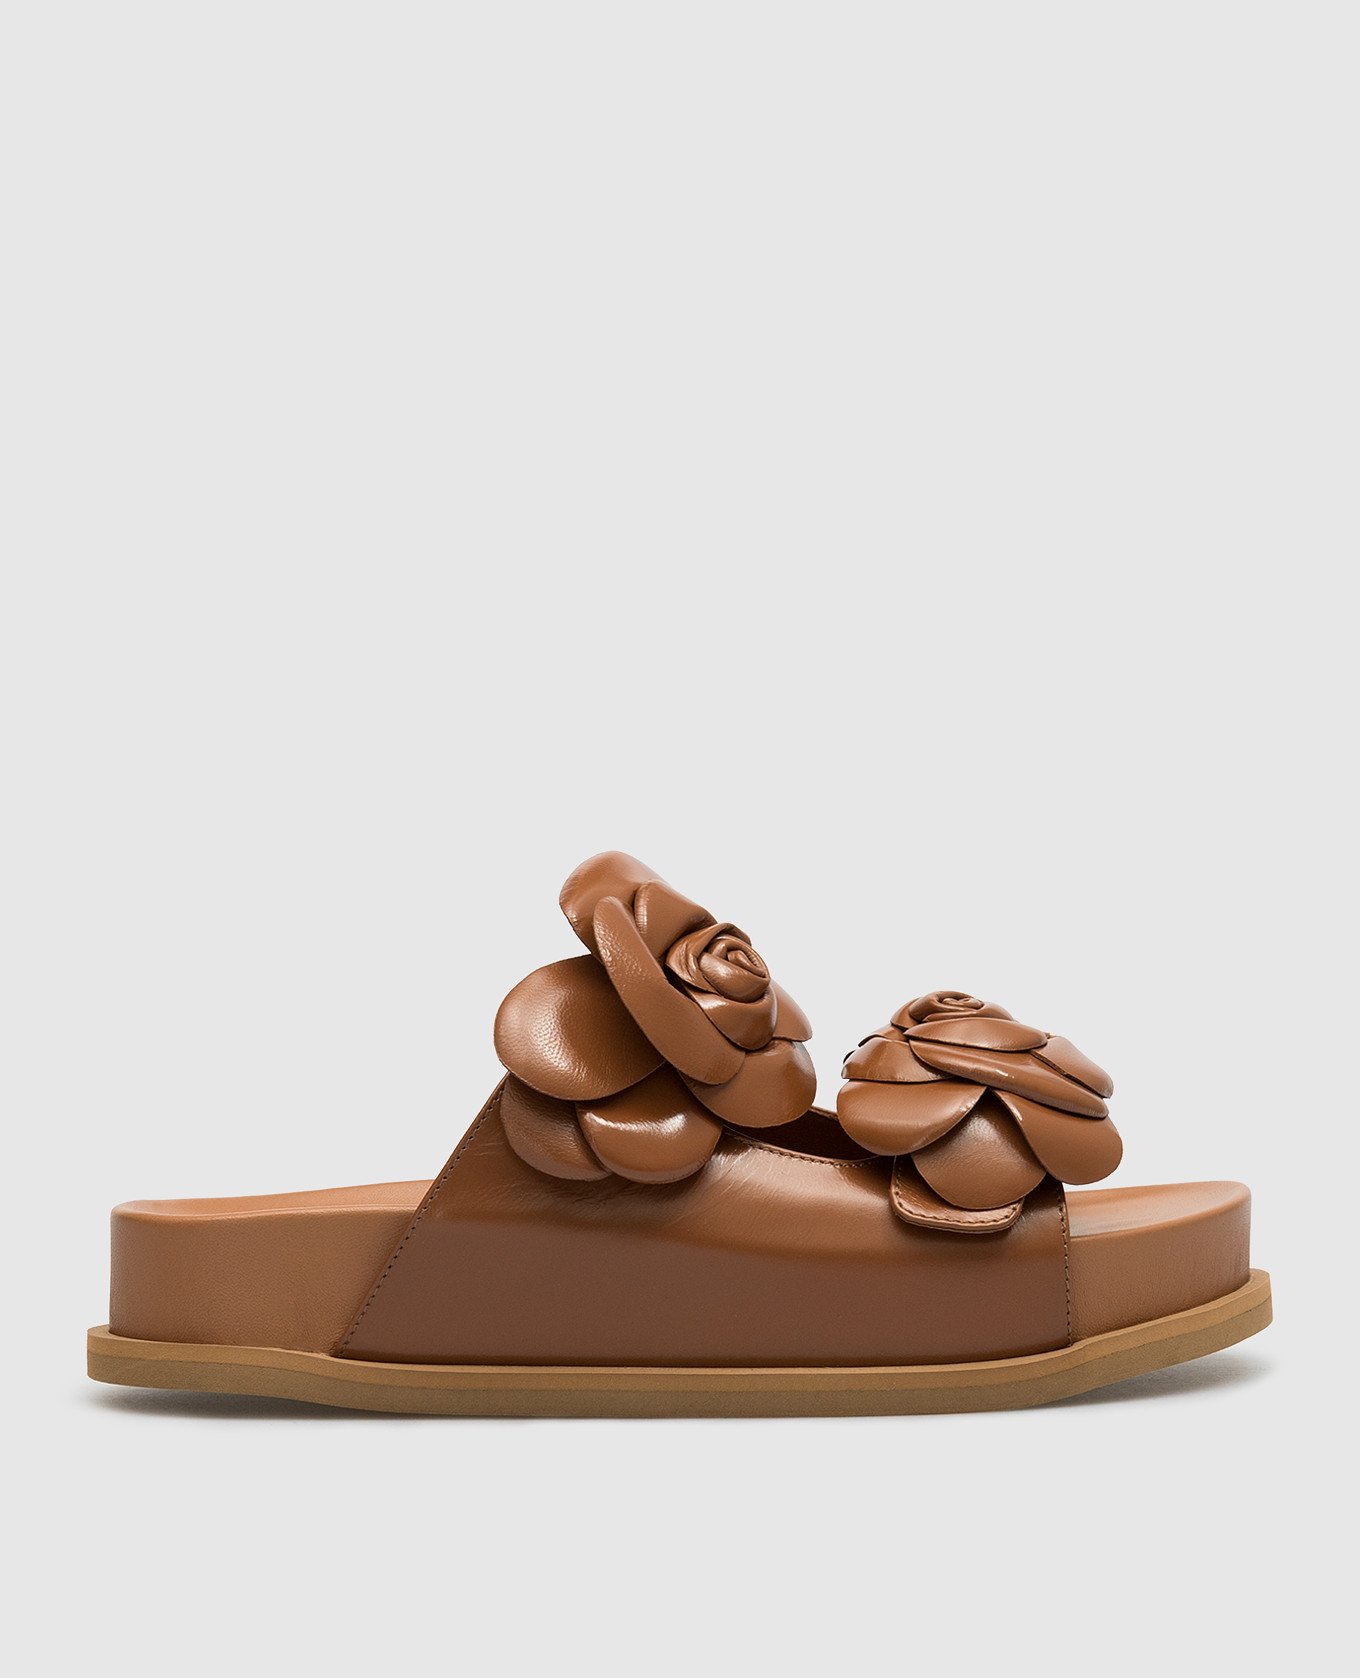 Brown leather flip flops with appliqué